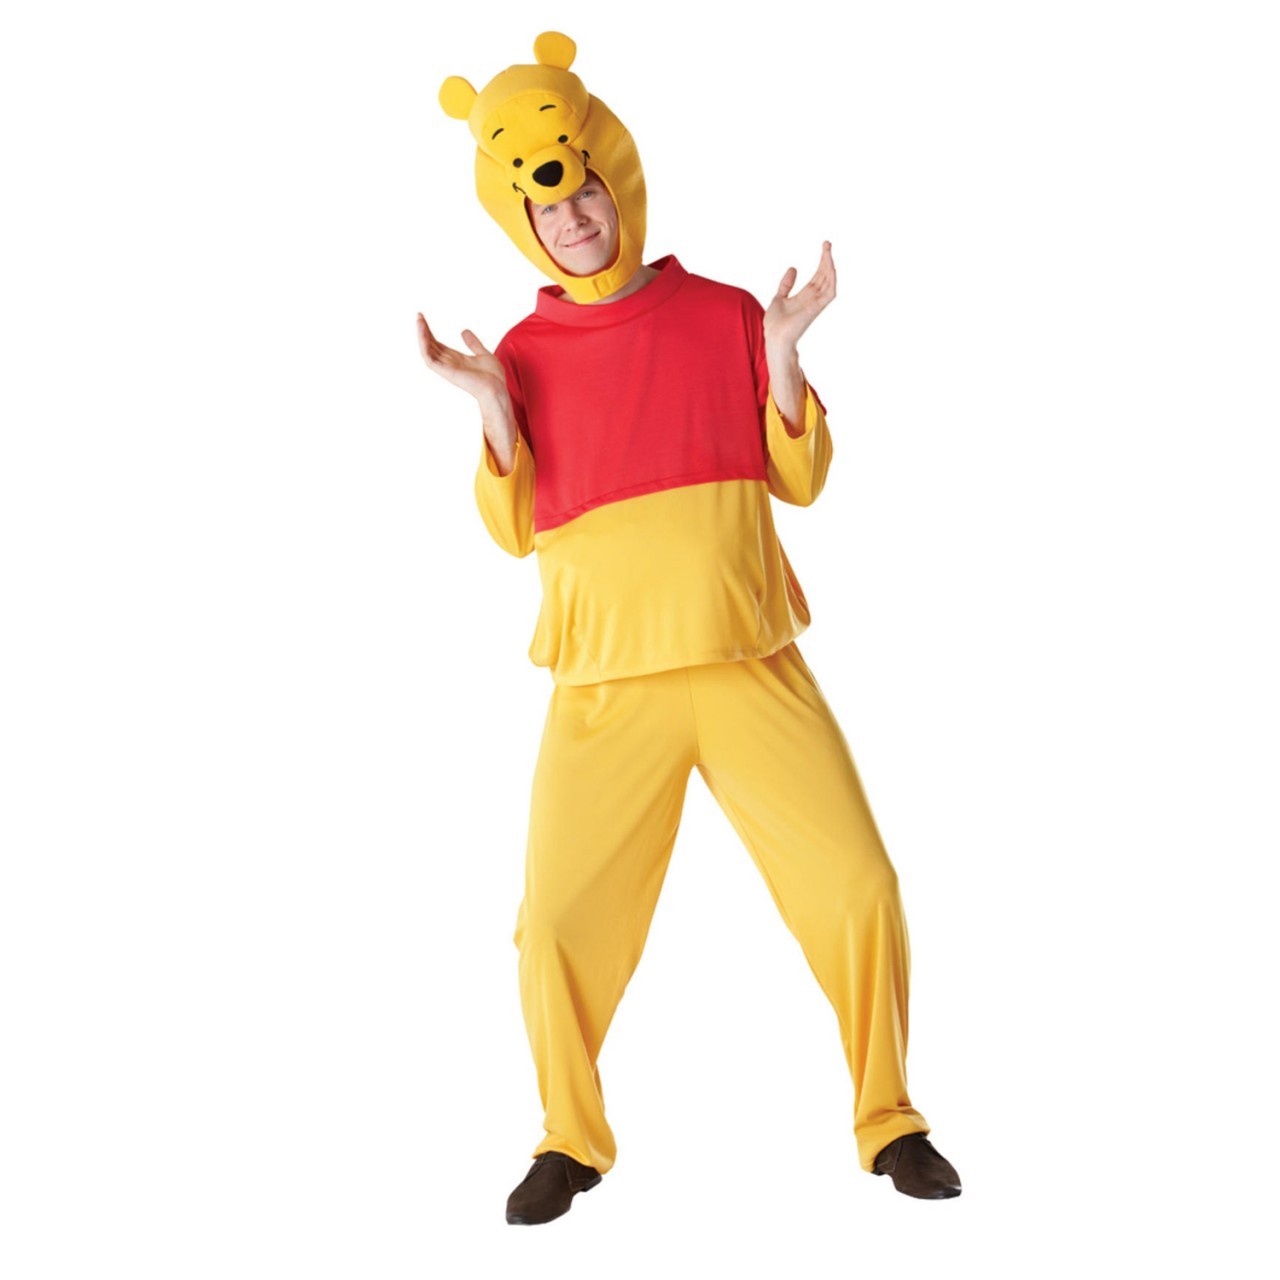 Winnie the Pooh Costume.